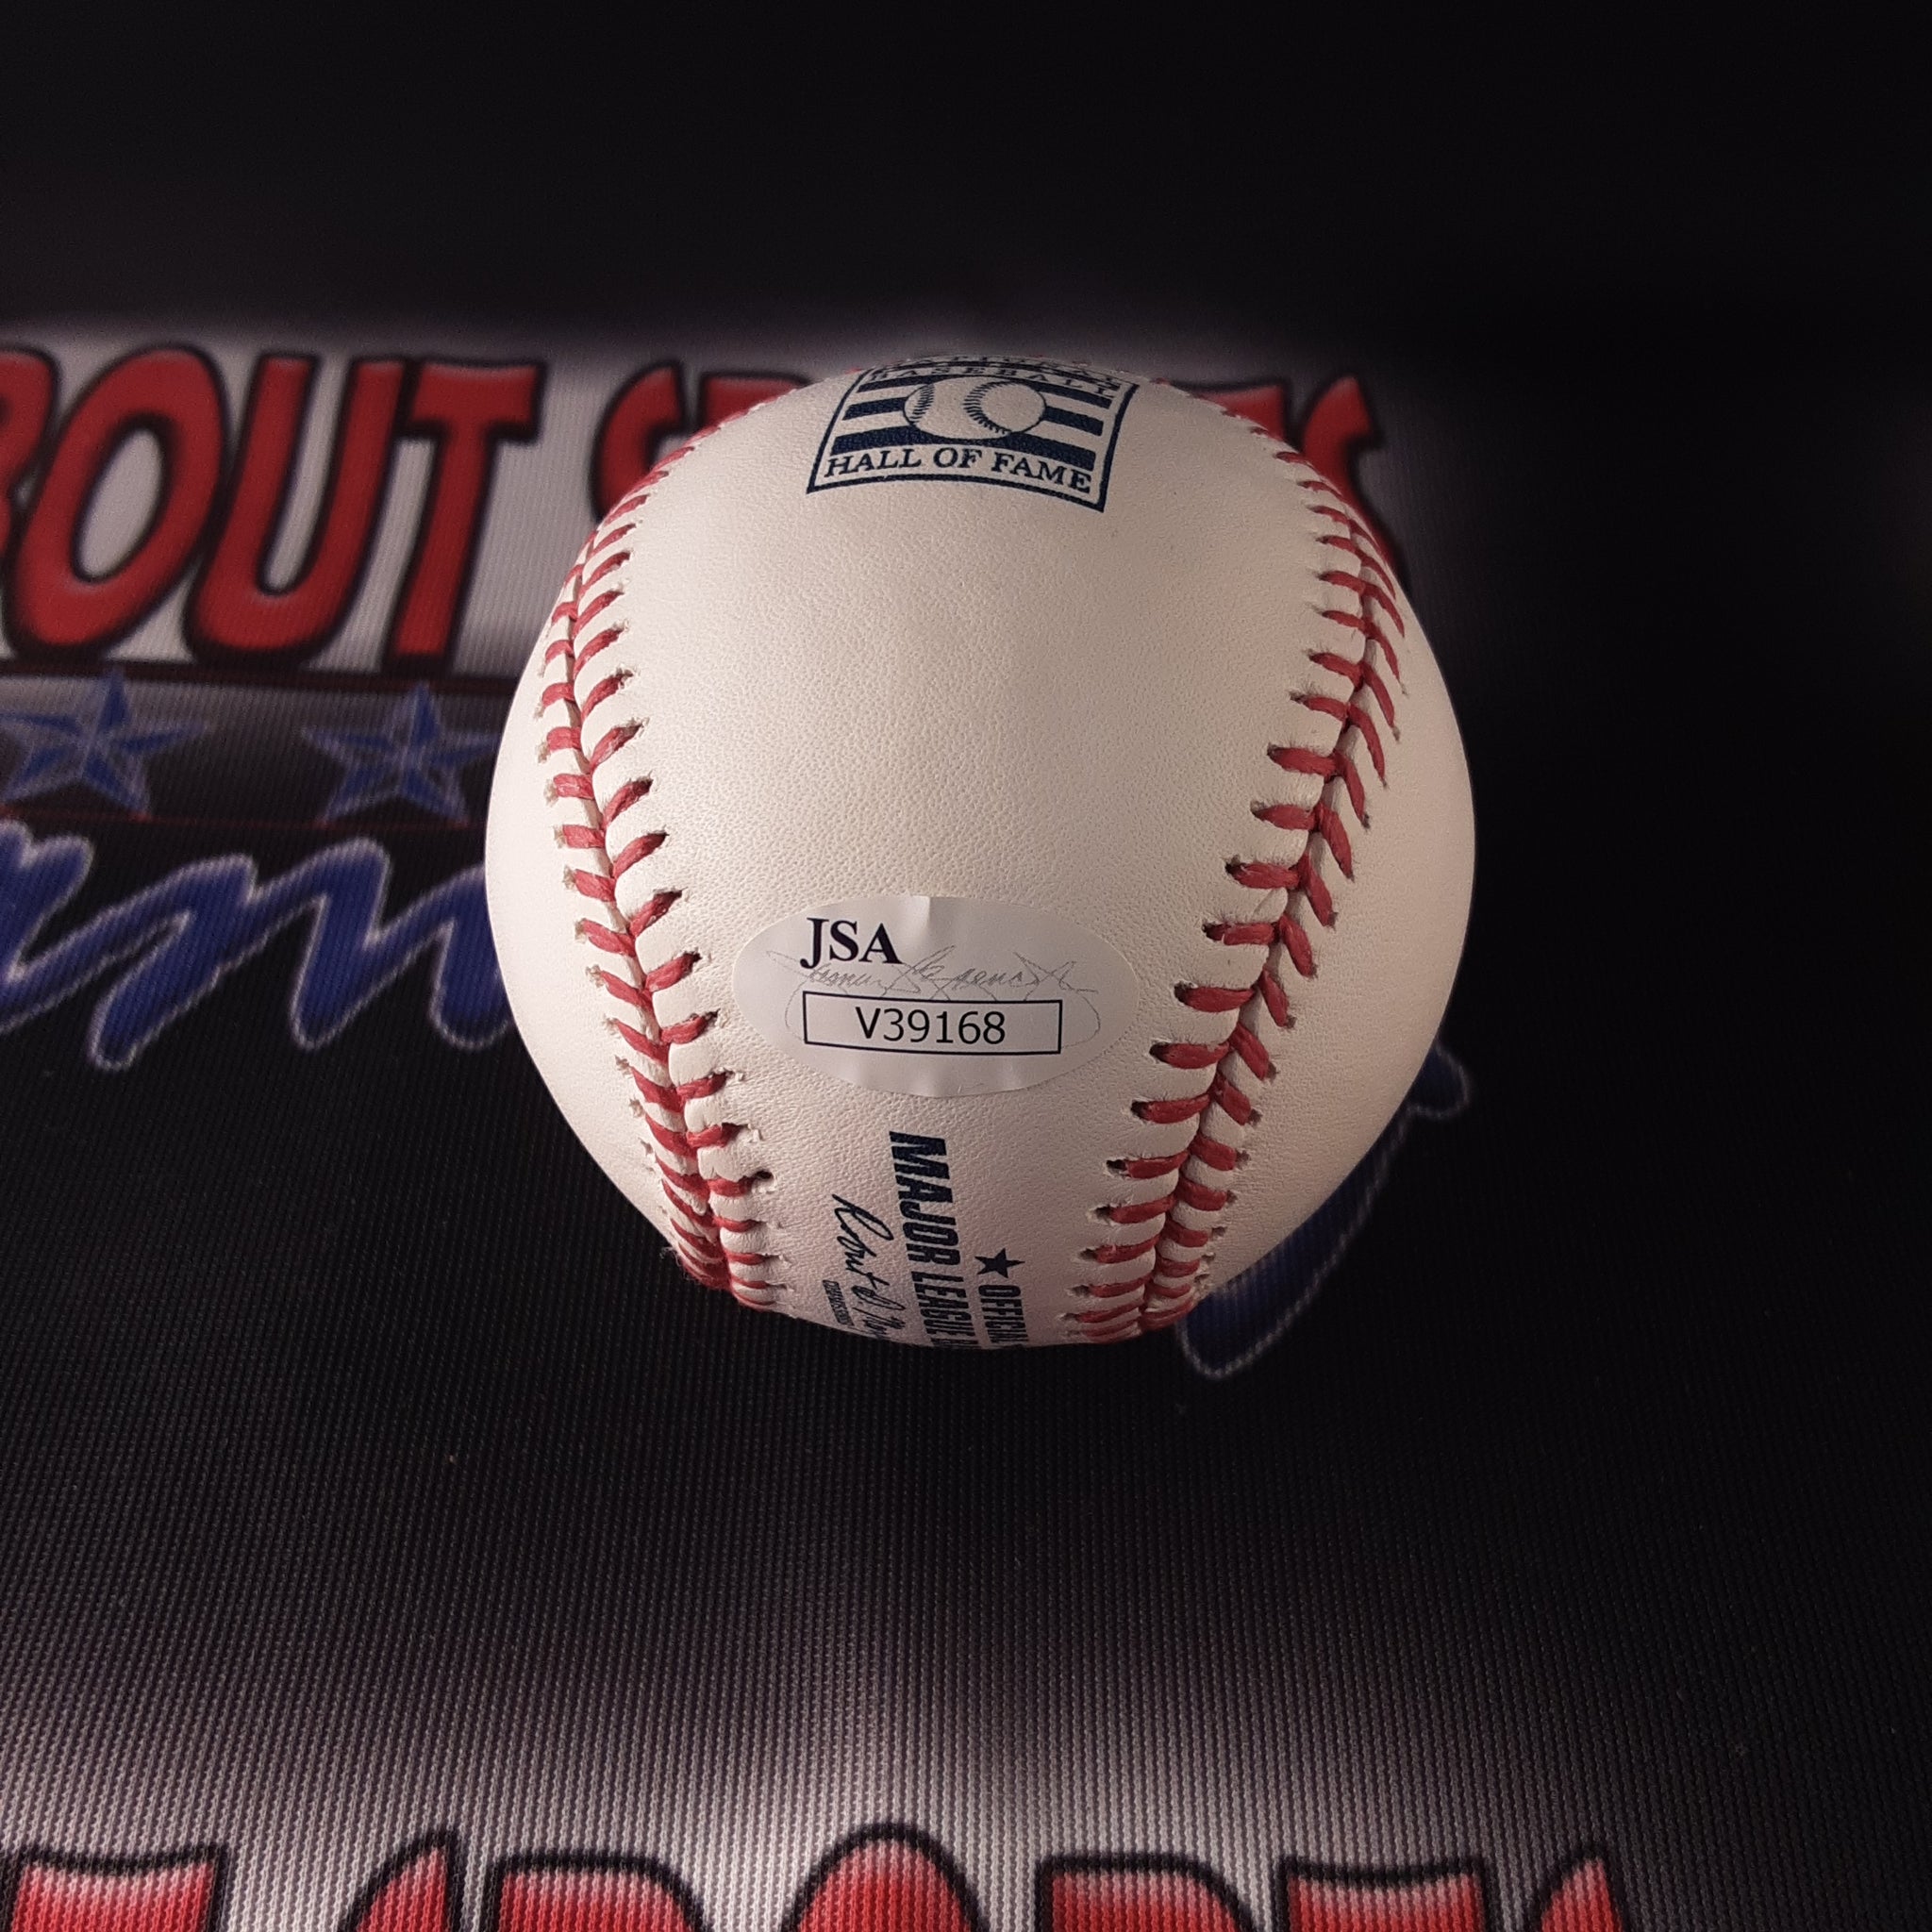 Tommy Lasorda Authentic Signed Baseball w/Inscription Autographed JSA.